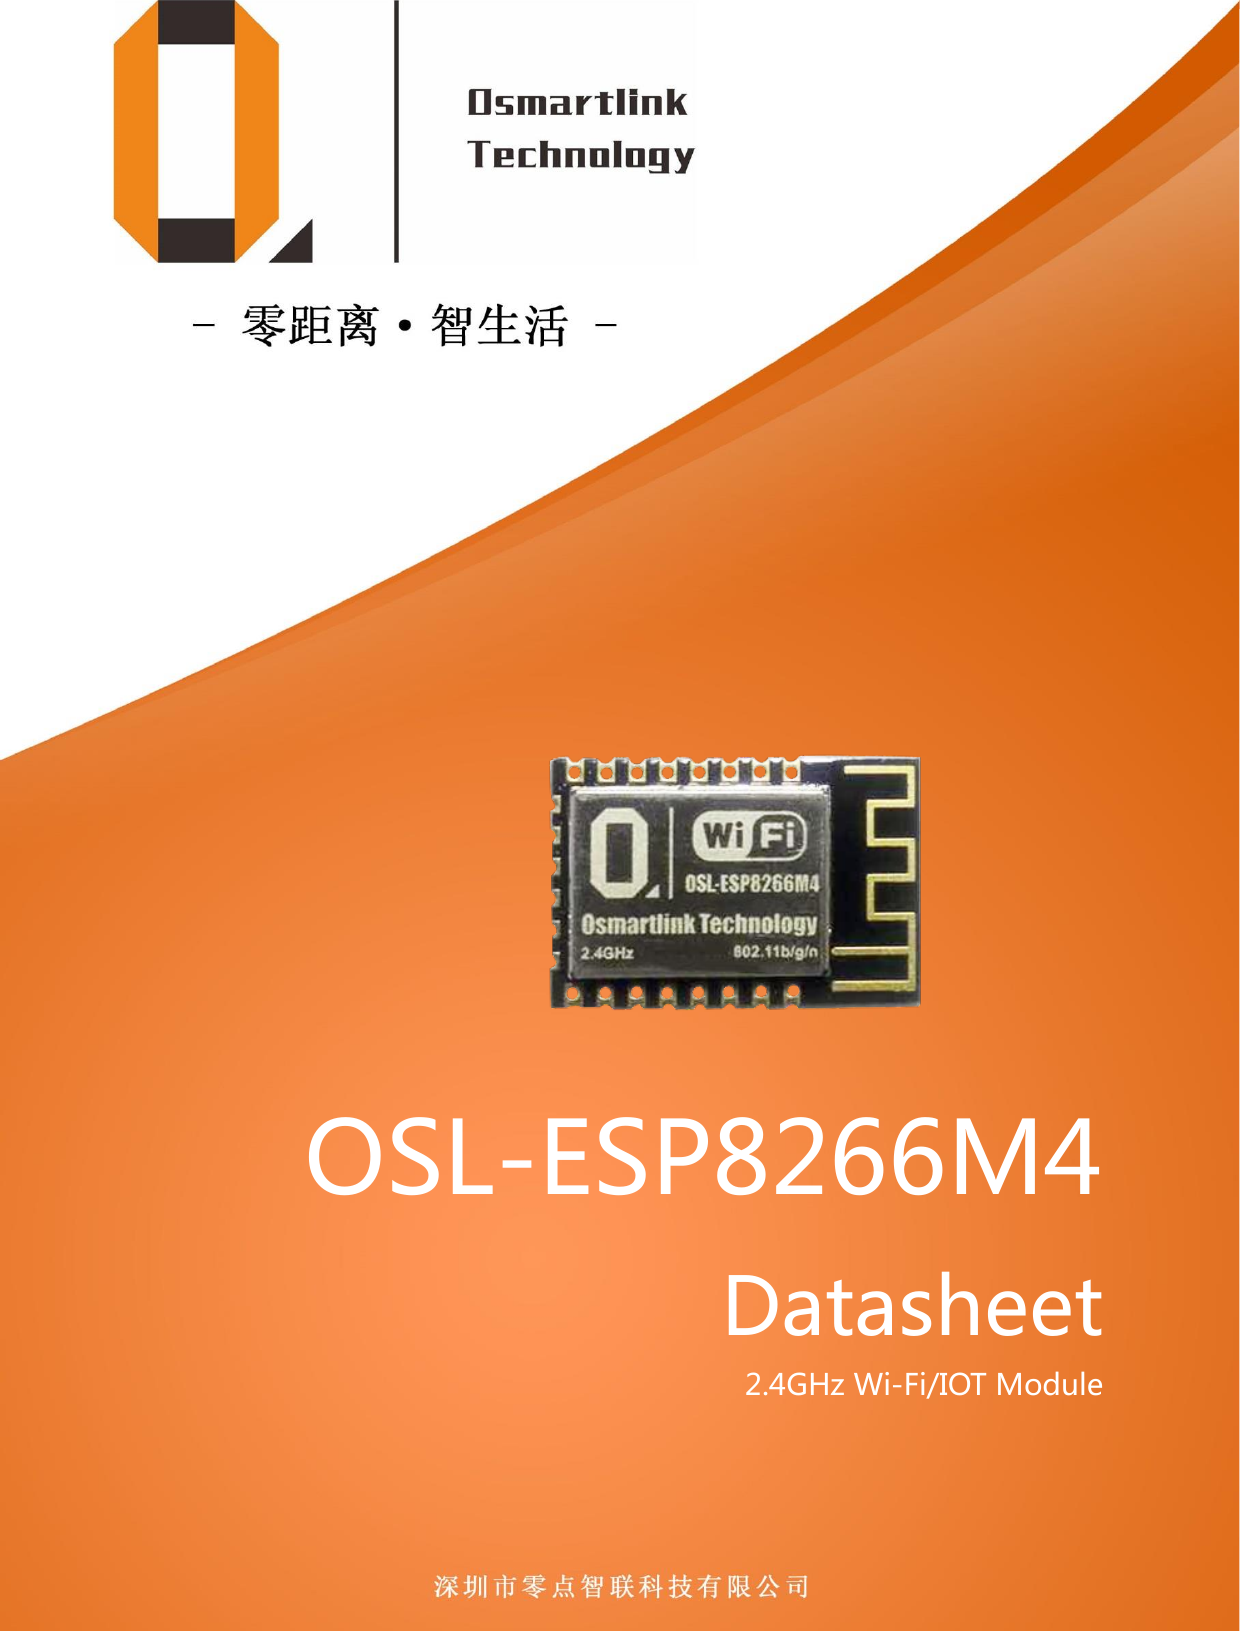  OSL-ESP8266M4 Datasheet 2.4GHz Wi-Fi/IOT Module              OSL-ESP8266M4 Datasheet 2.4GHz Wi-Fi/IOT Module    